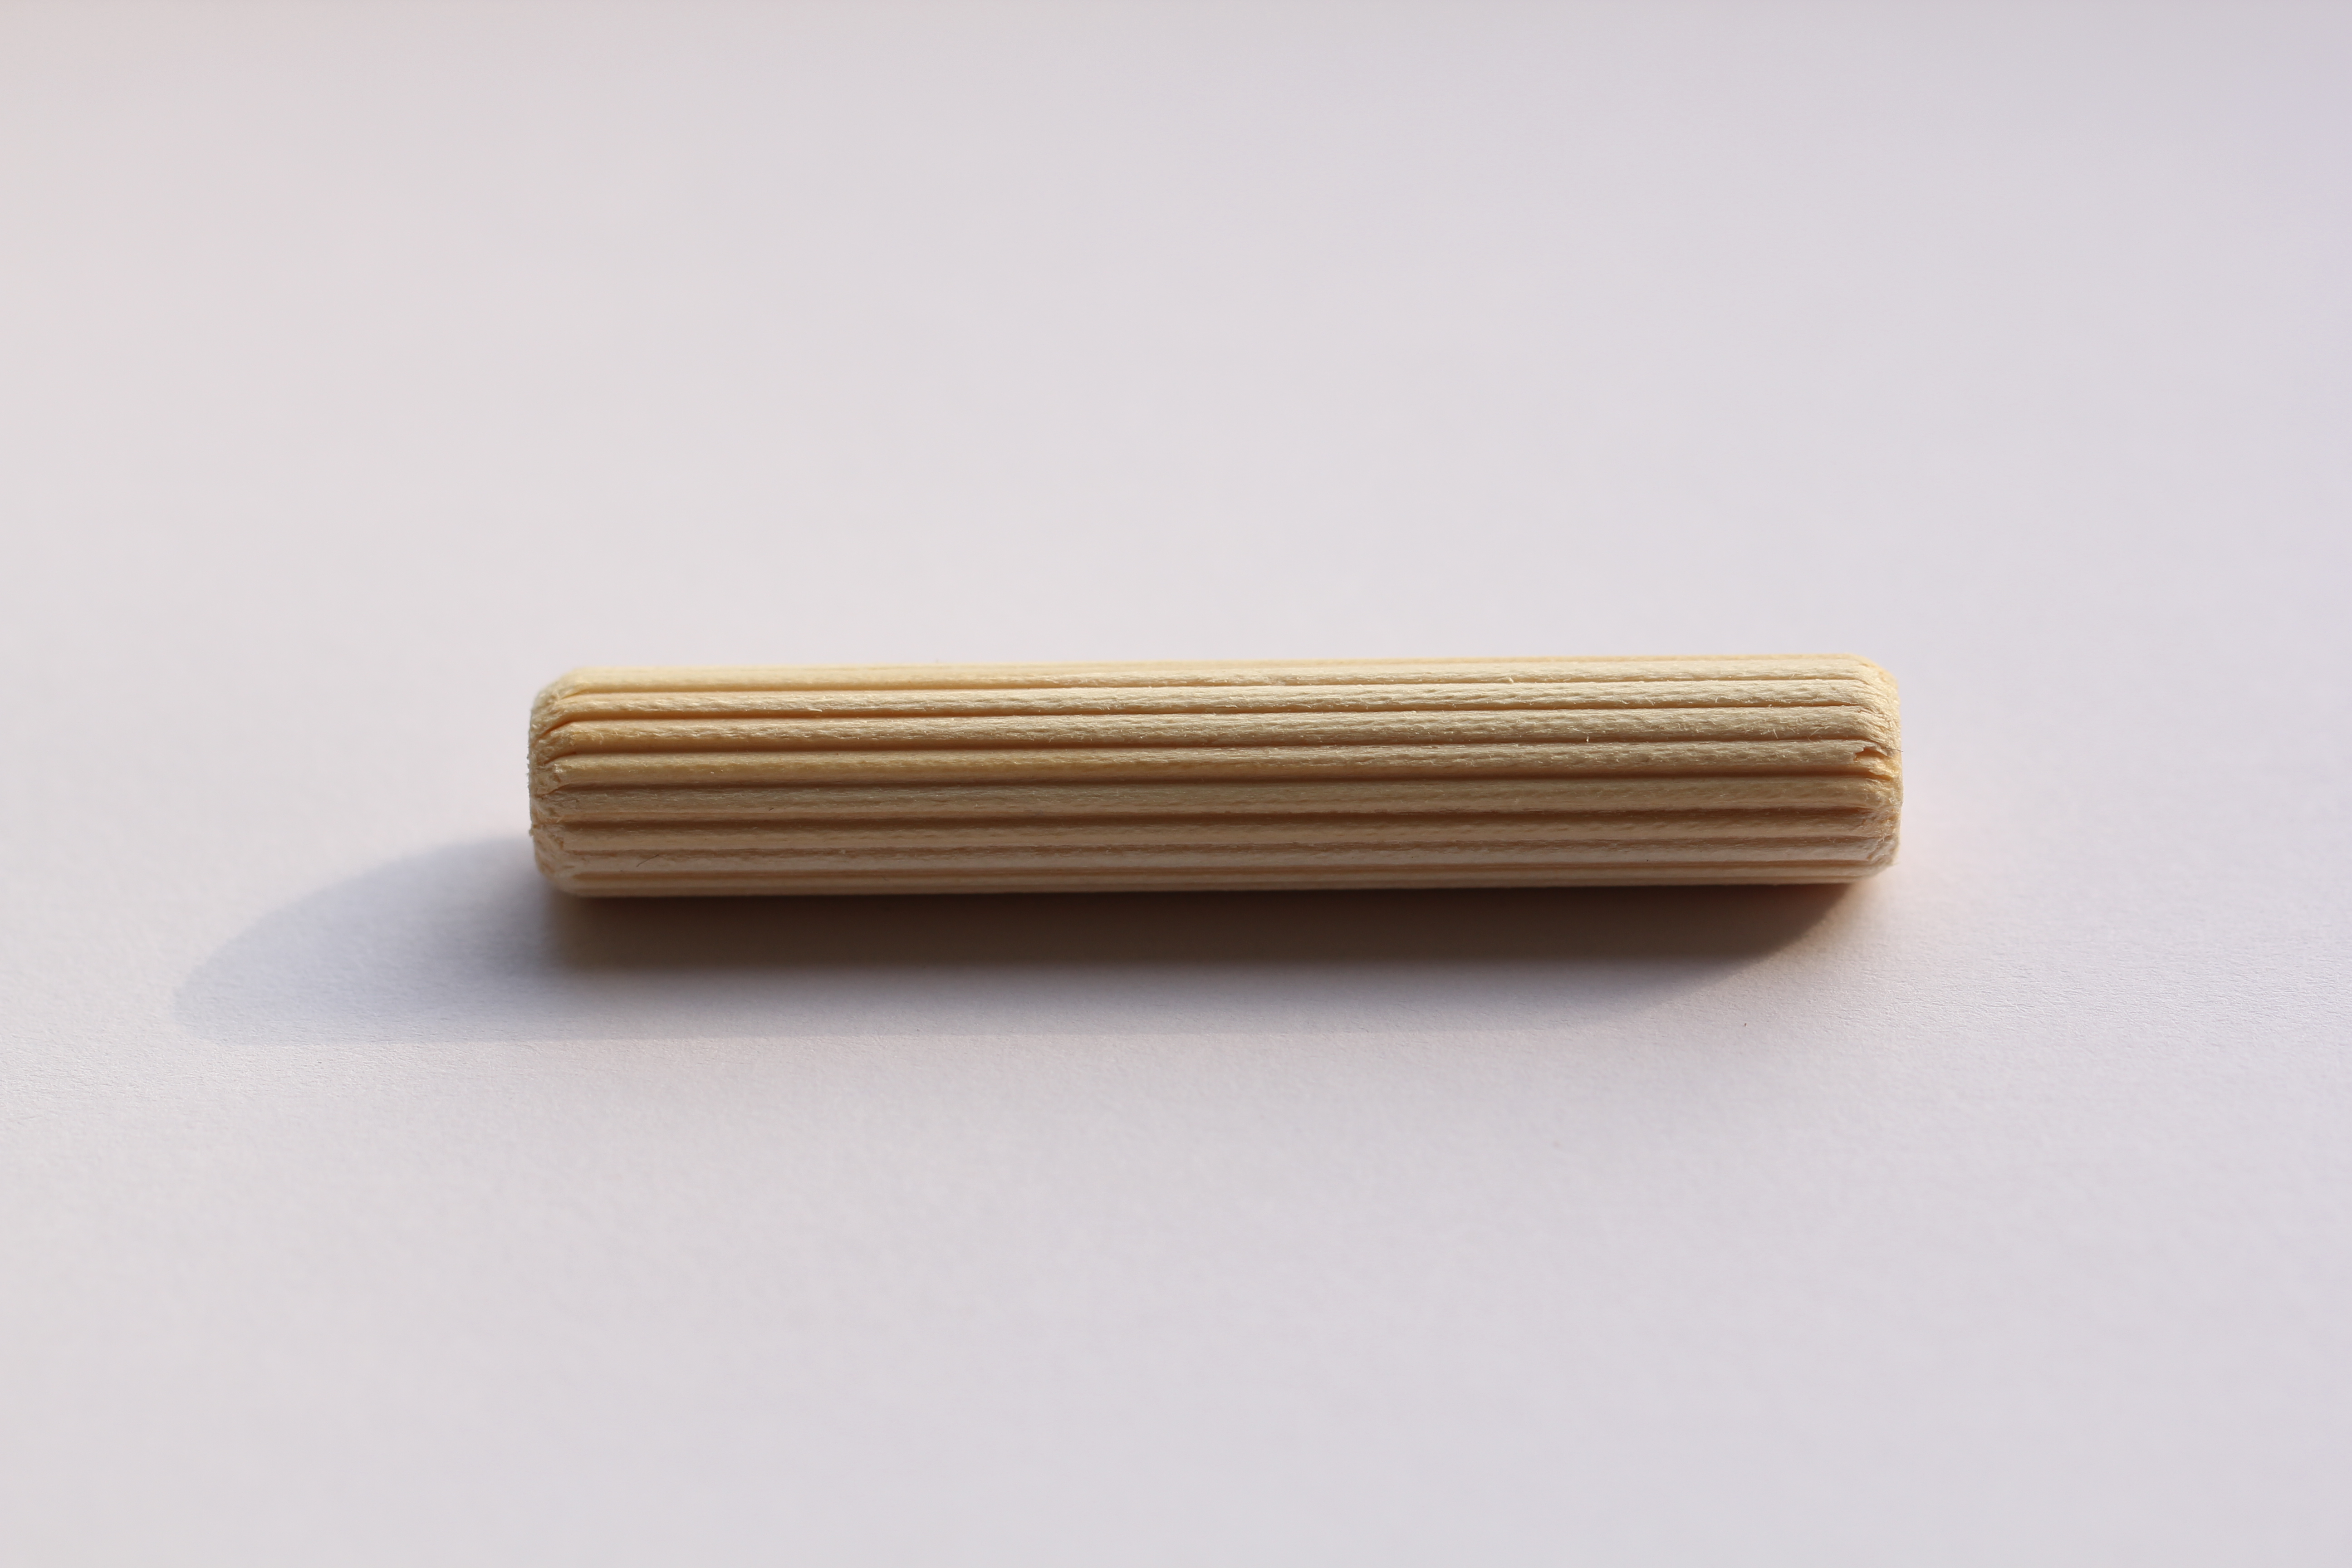 MULTI spruce wood dowel pin